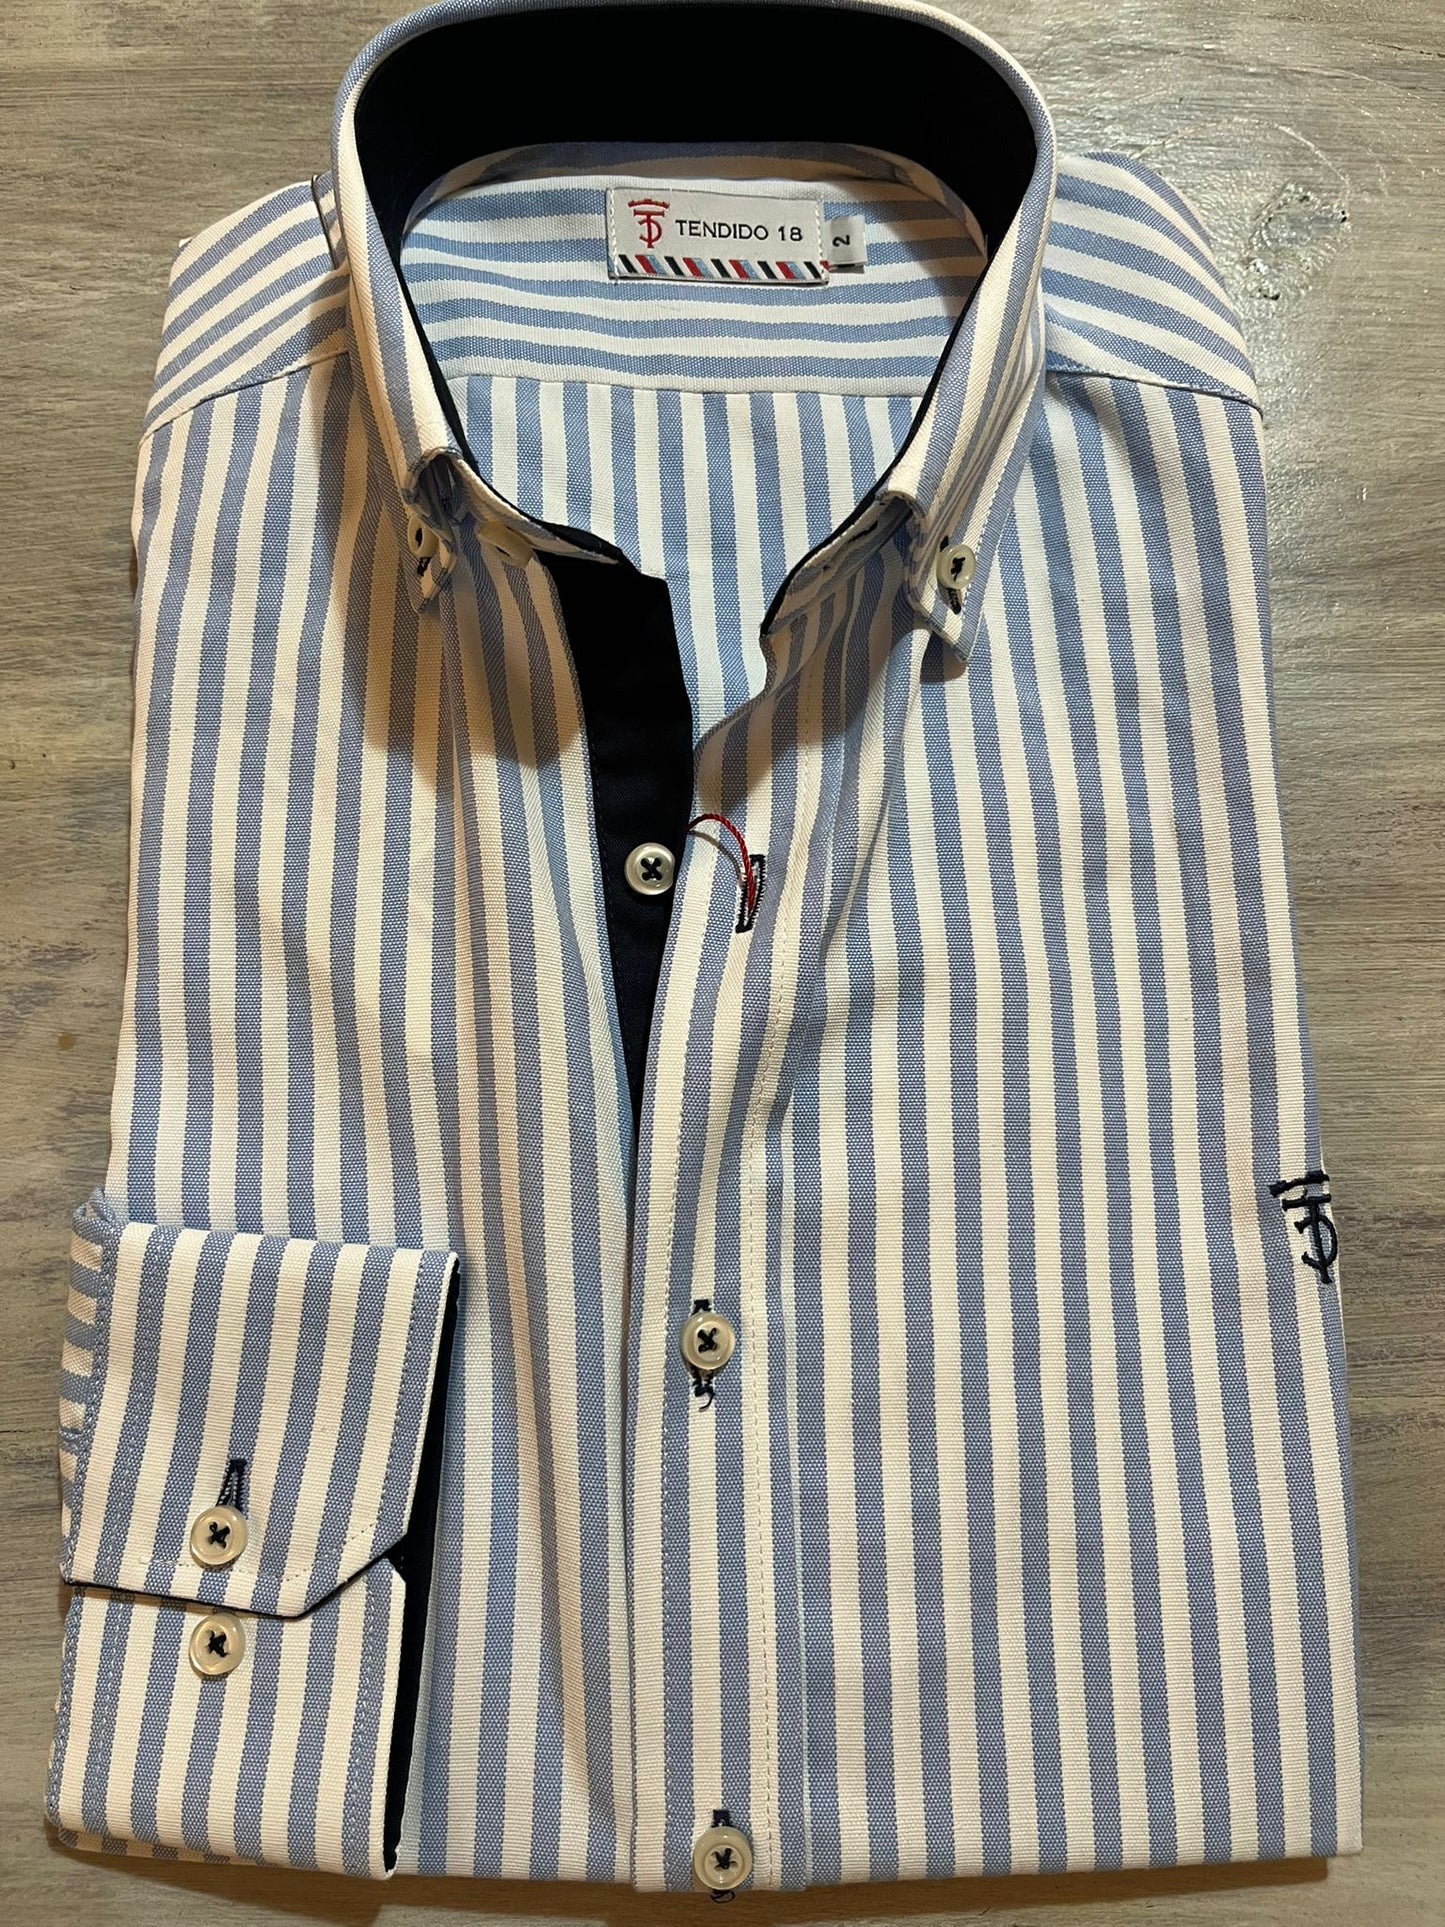 Light blue striped oxford shirt